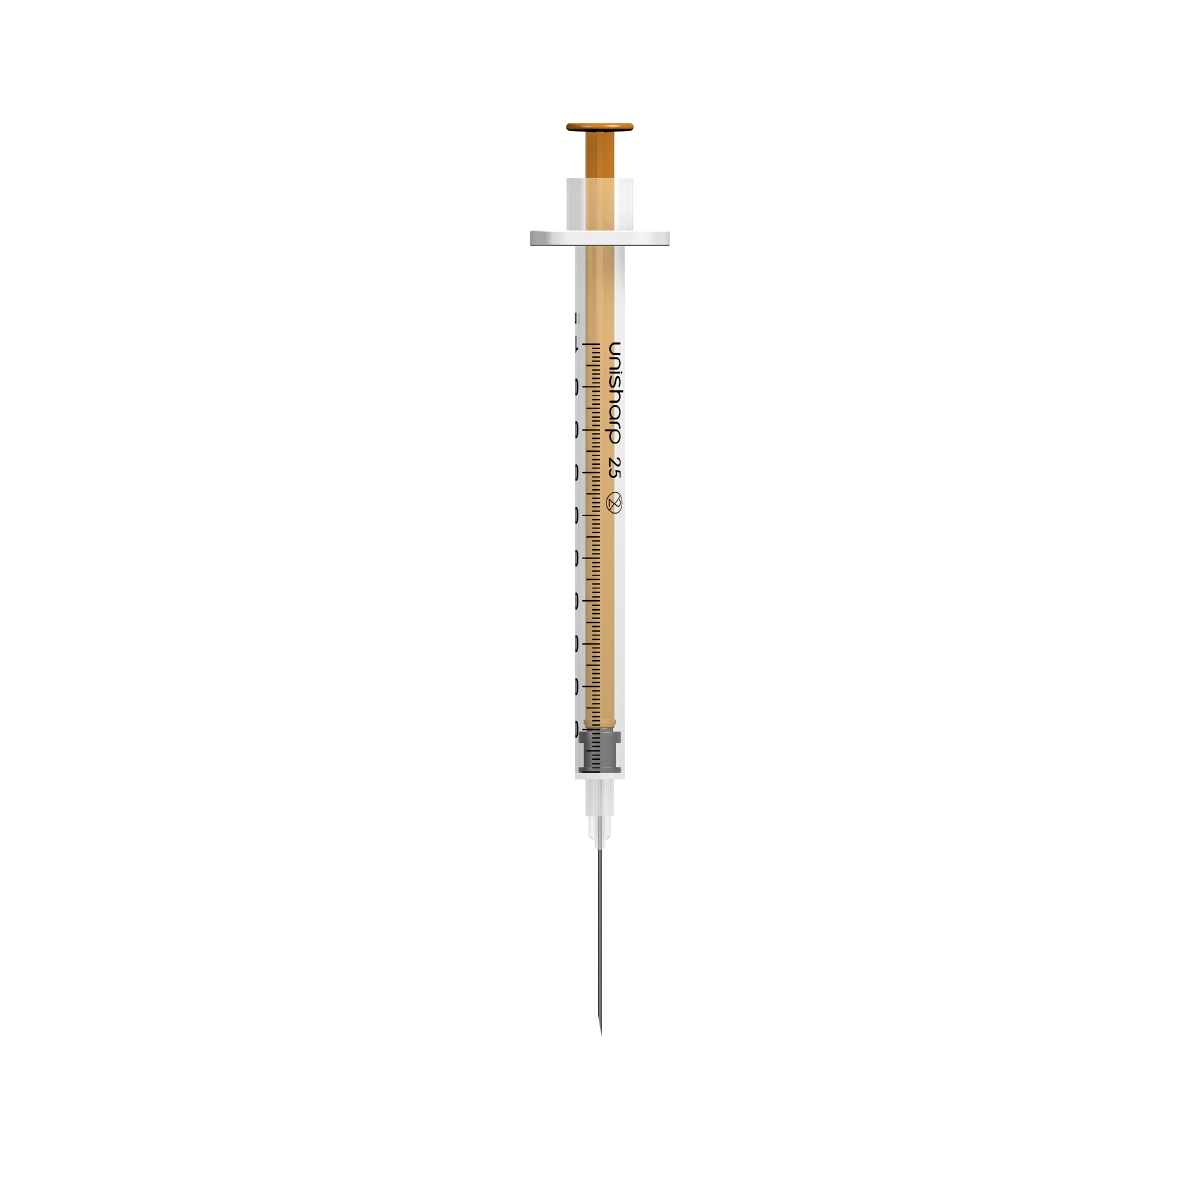 Unisharp 1ml 25G 25mm (1 inch) orange fixed needle low dead space syringe